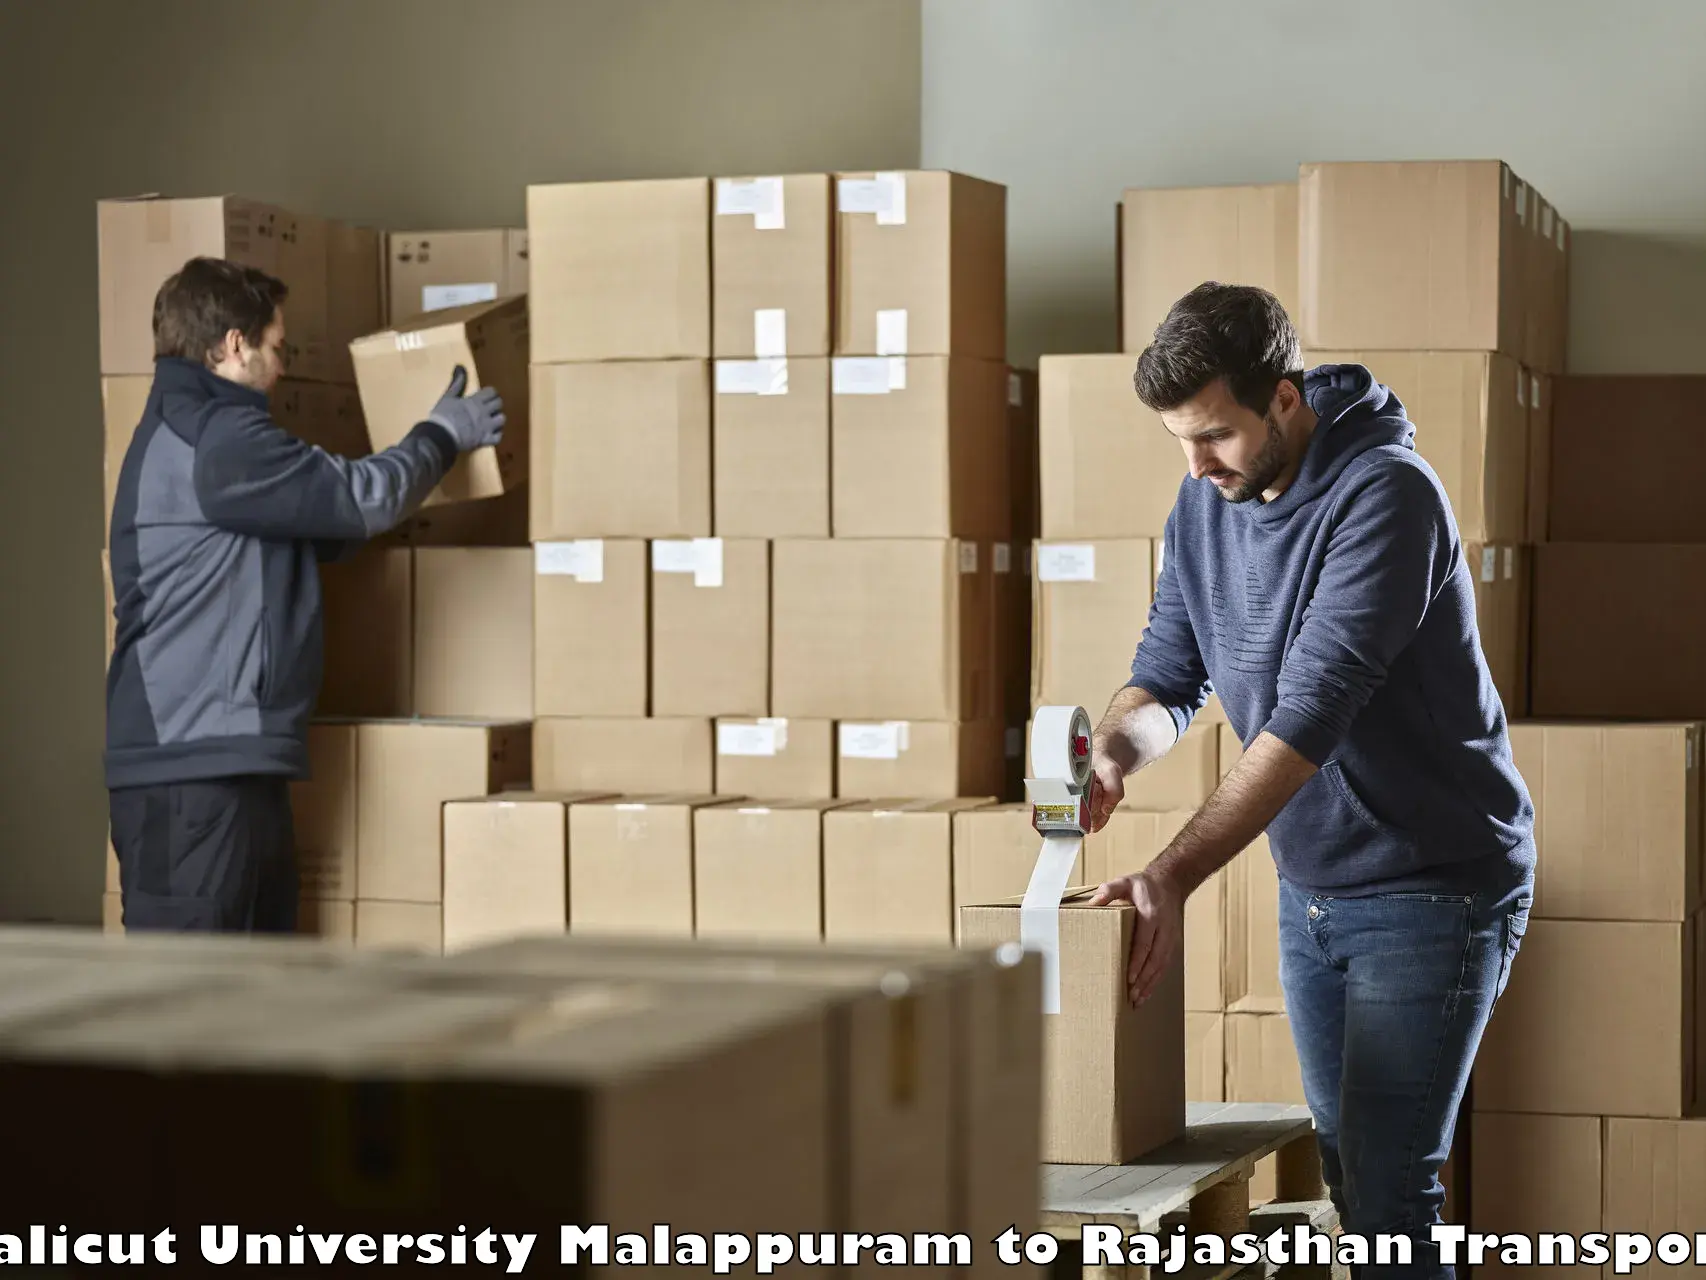 Furniture transport service in Calicut University Malappuram to Kishangarh